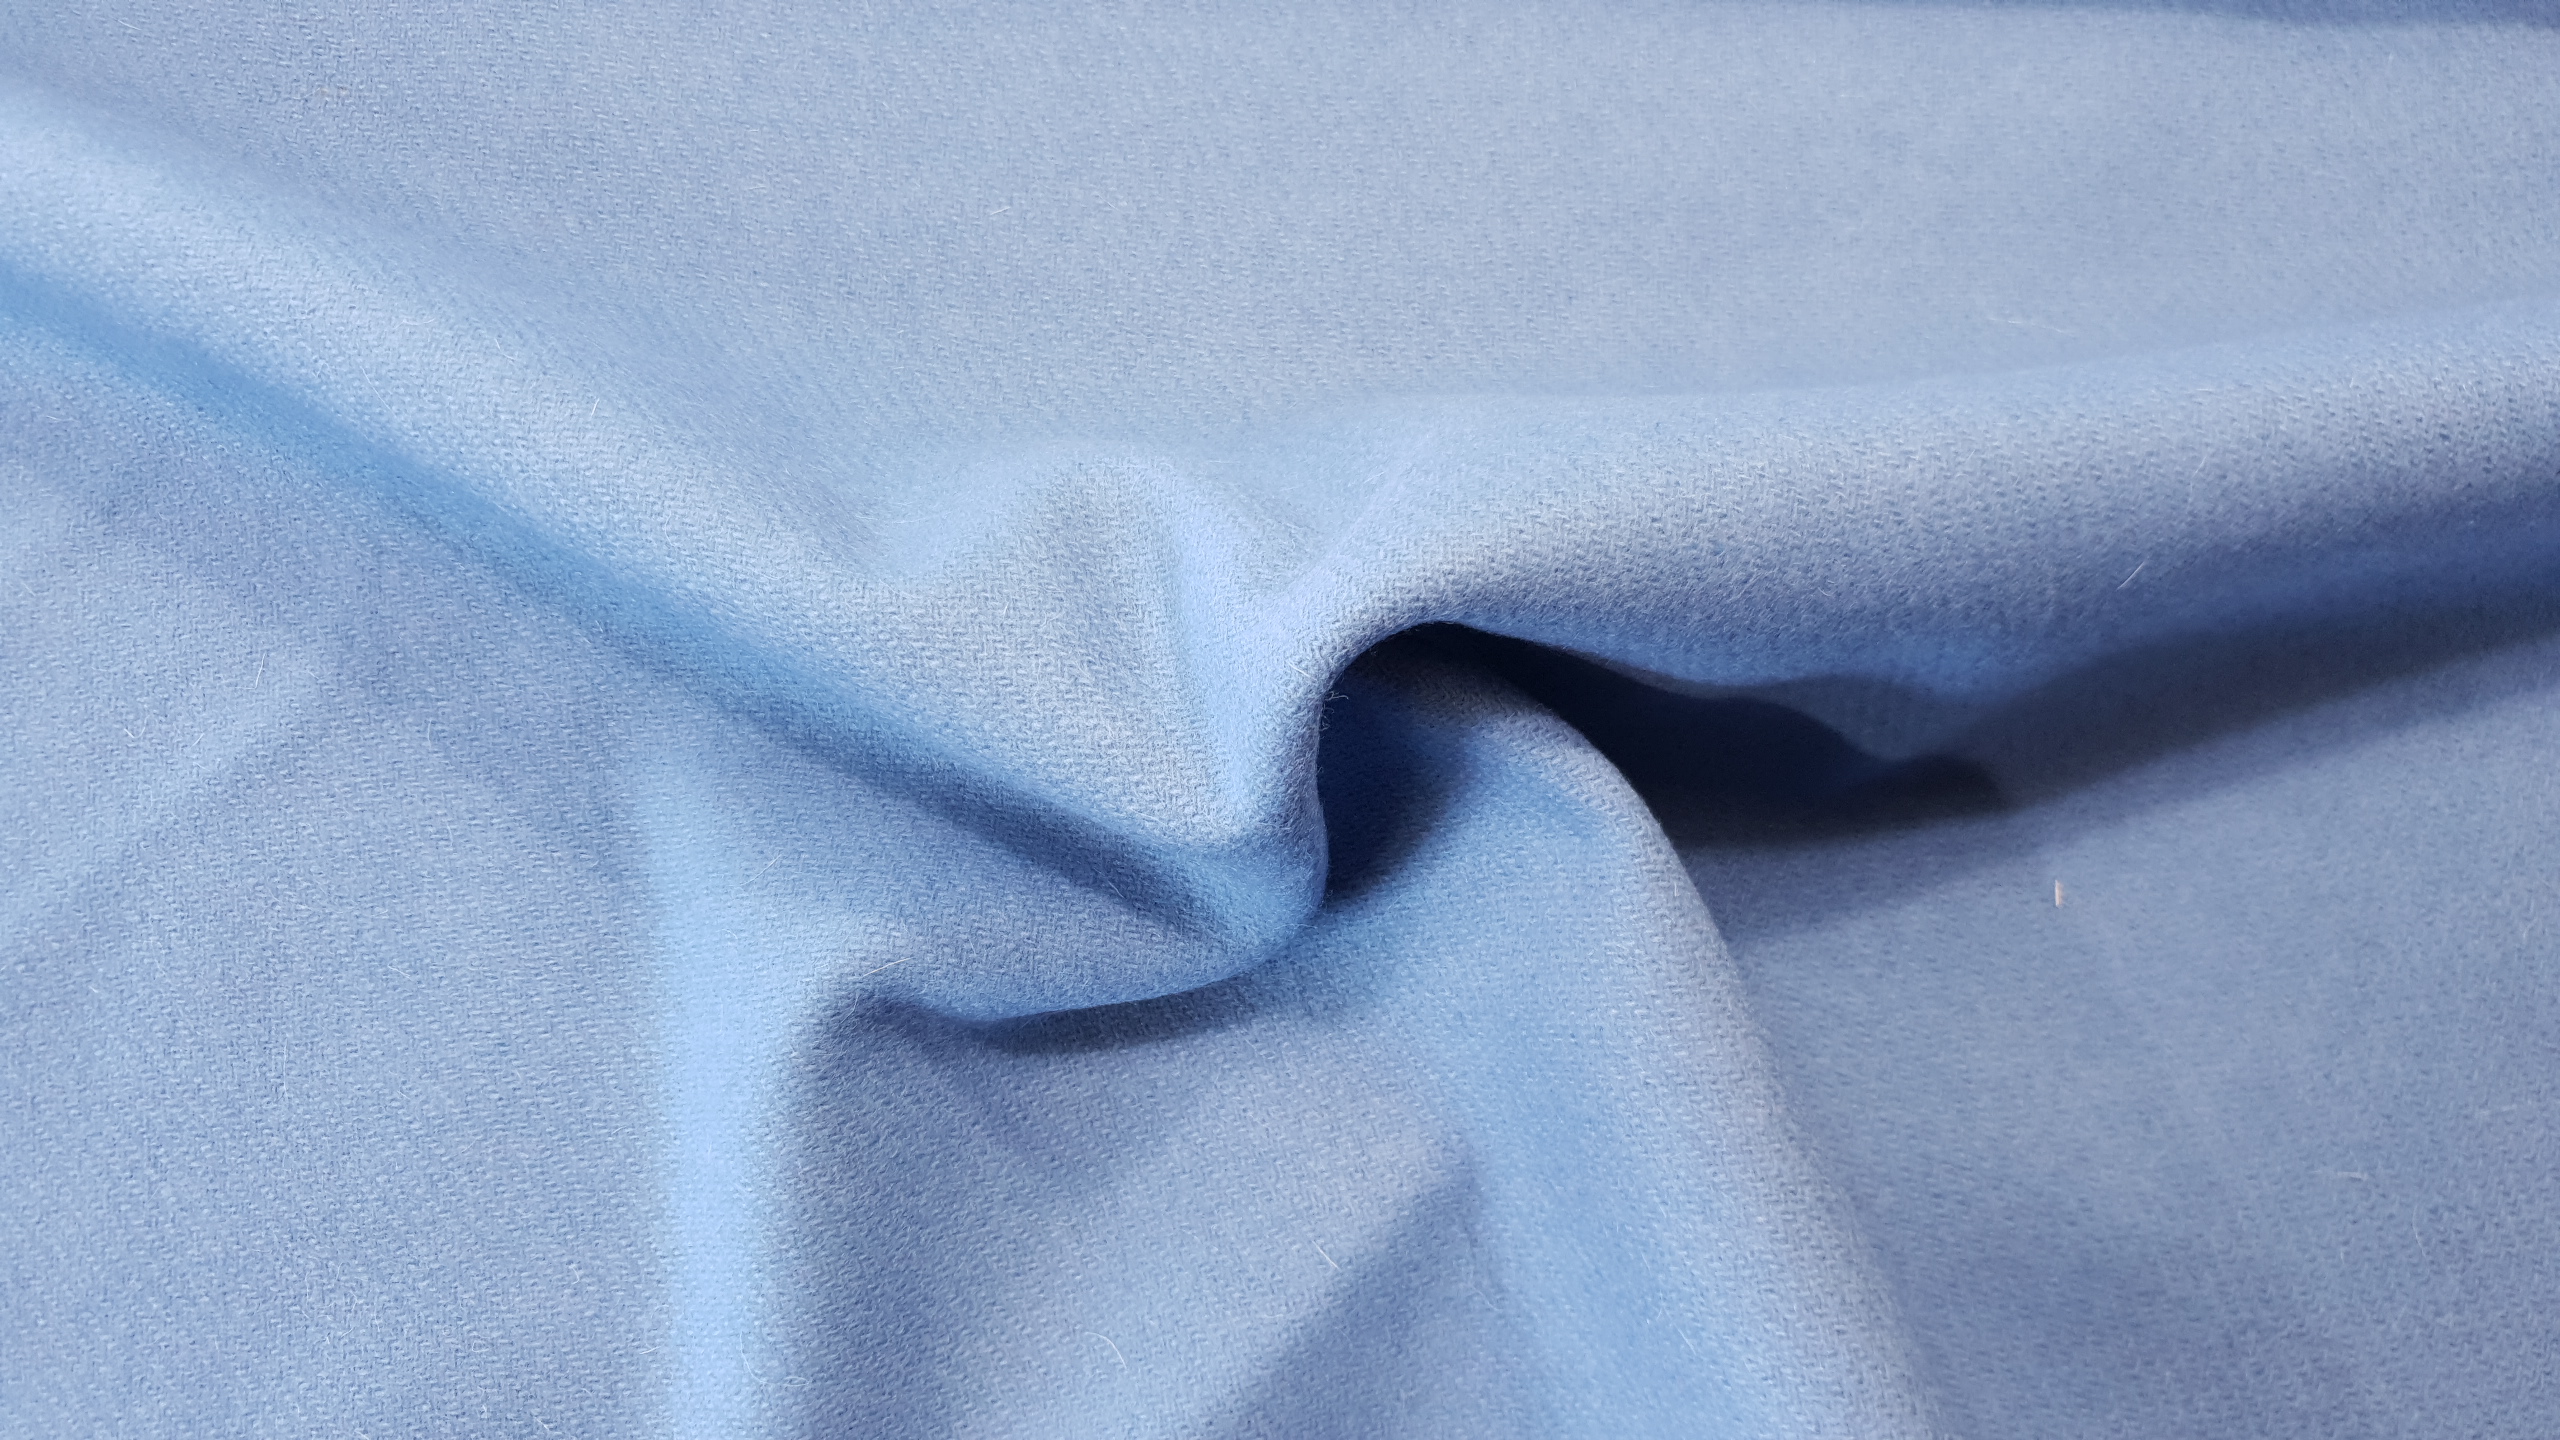 SIGRID medium wool twill- light blue 26